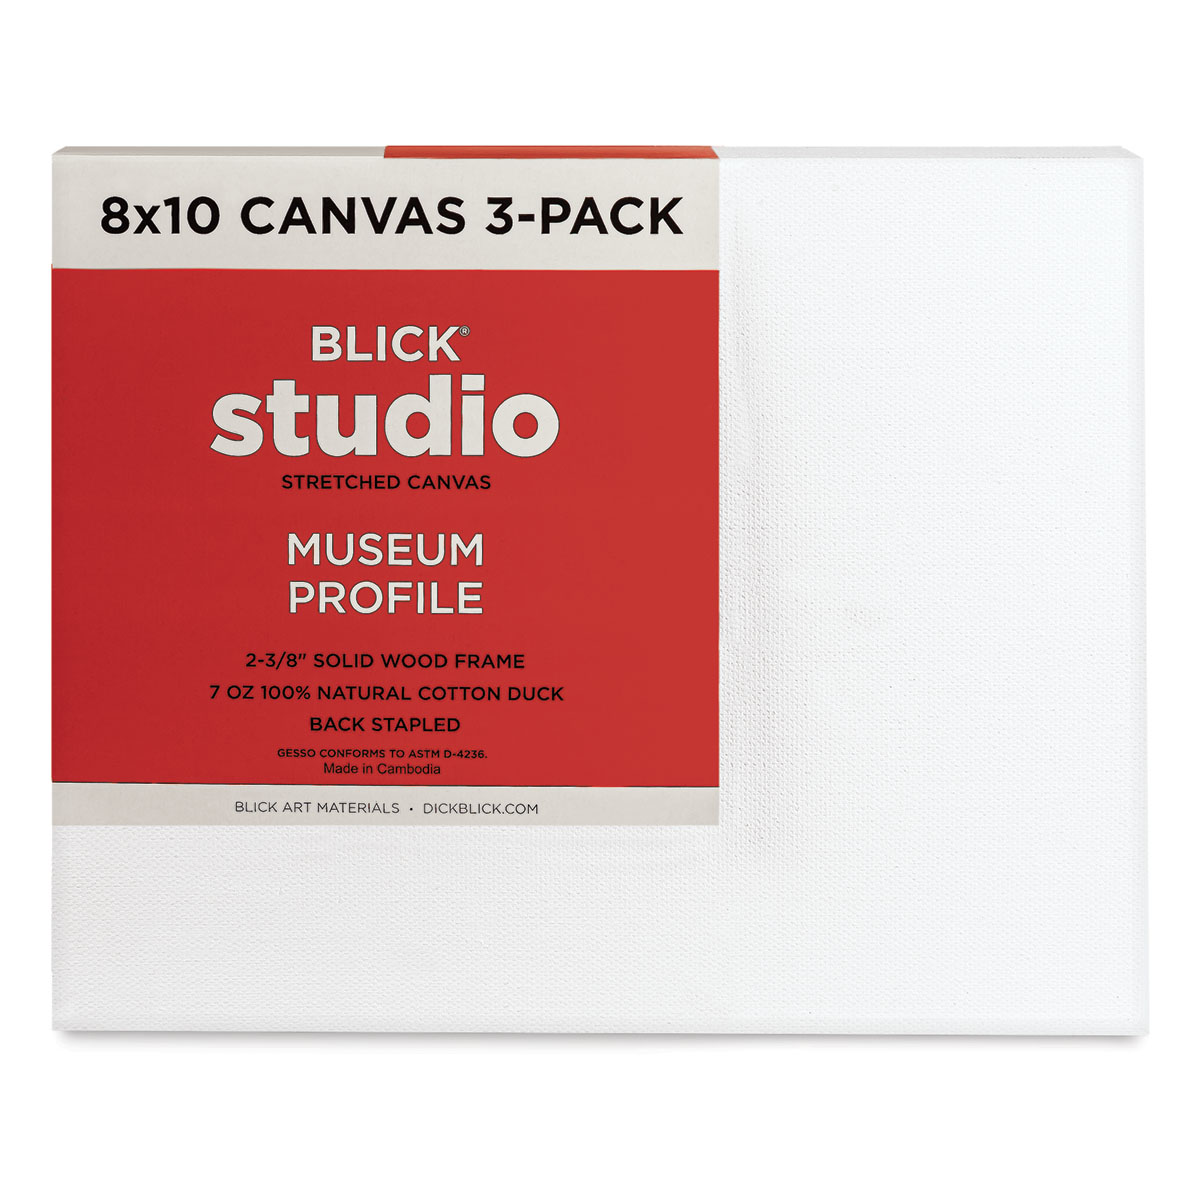 Blick Studio Cotton Canvas Panels - 12 inch x 16 inch, Pkg of 5